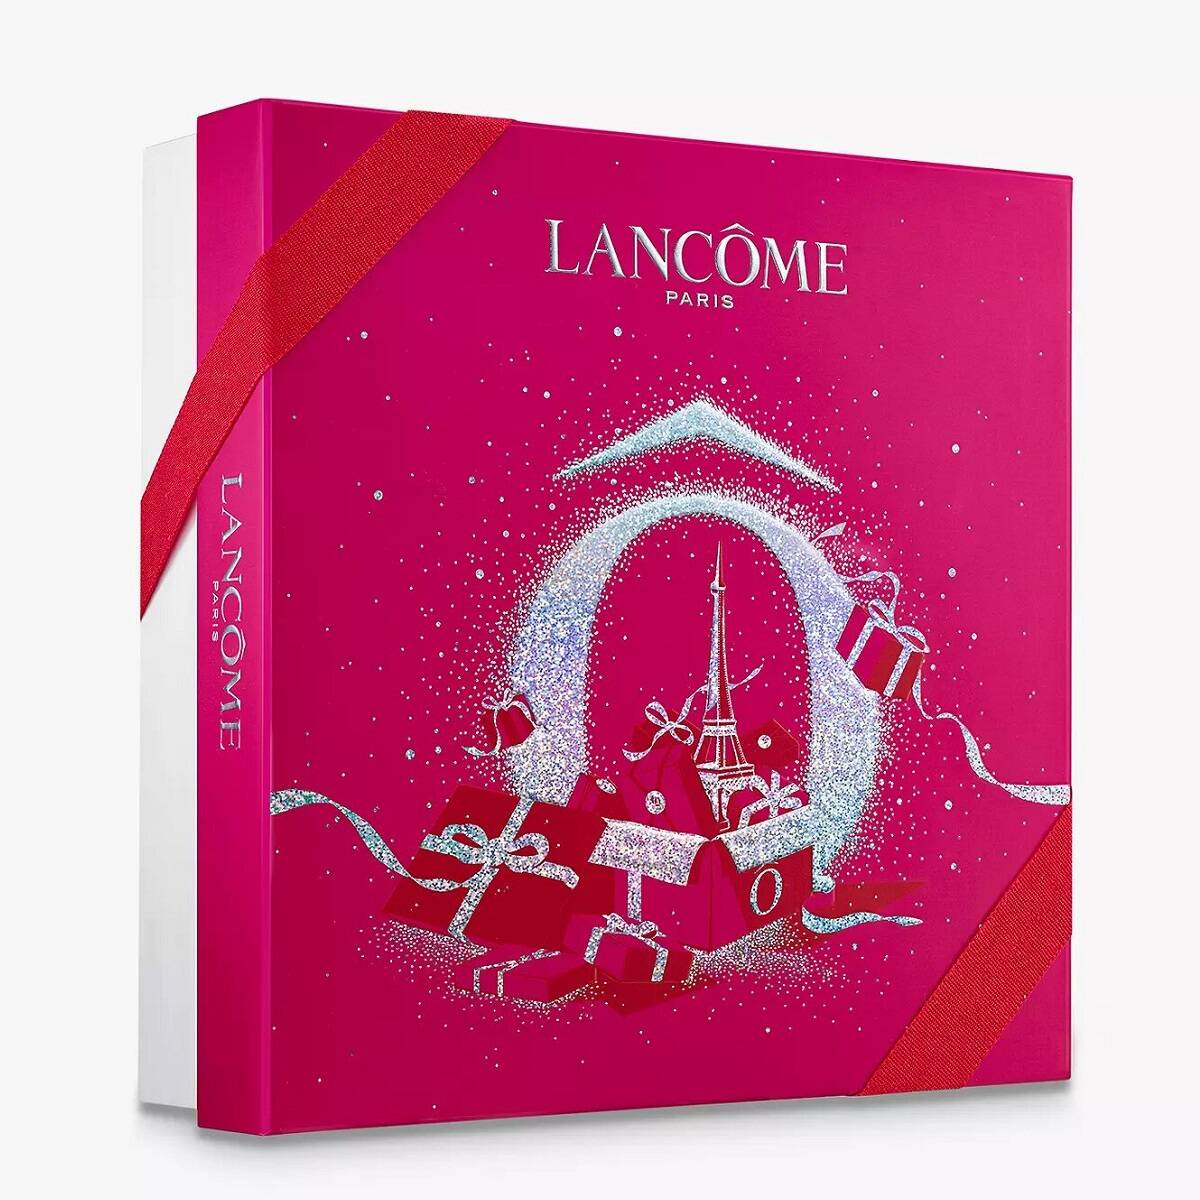 ست ادکلن لانکوم مدل ترزور لانویت همراه لوسیون و ژل ادکلنی شستشوی لانکوم لانویت 50 میل (Lancome La Nuit Tresor L'Eau de Parfum Gift Set, 50ml)